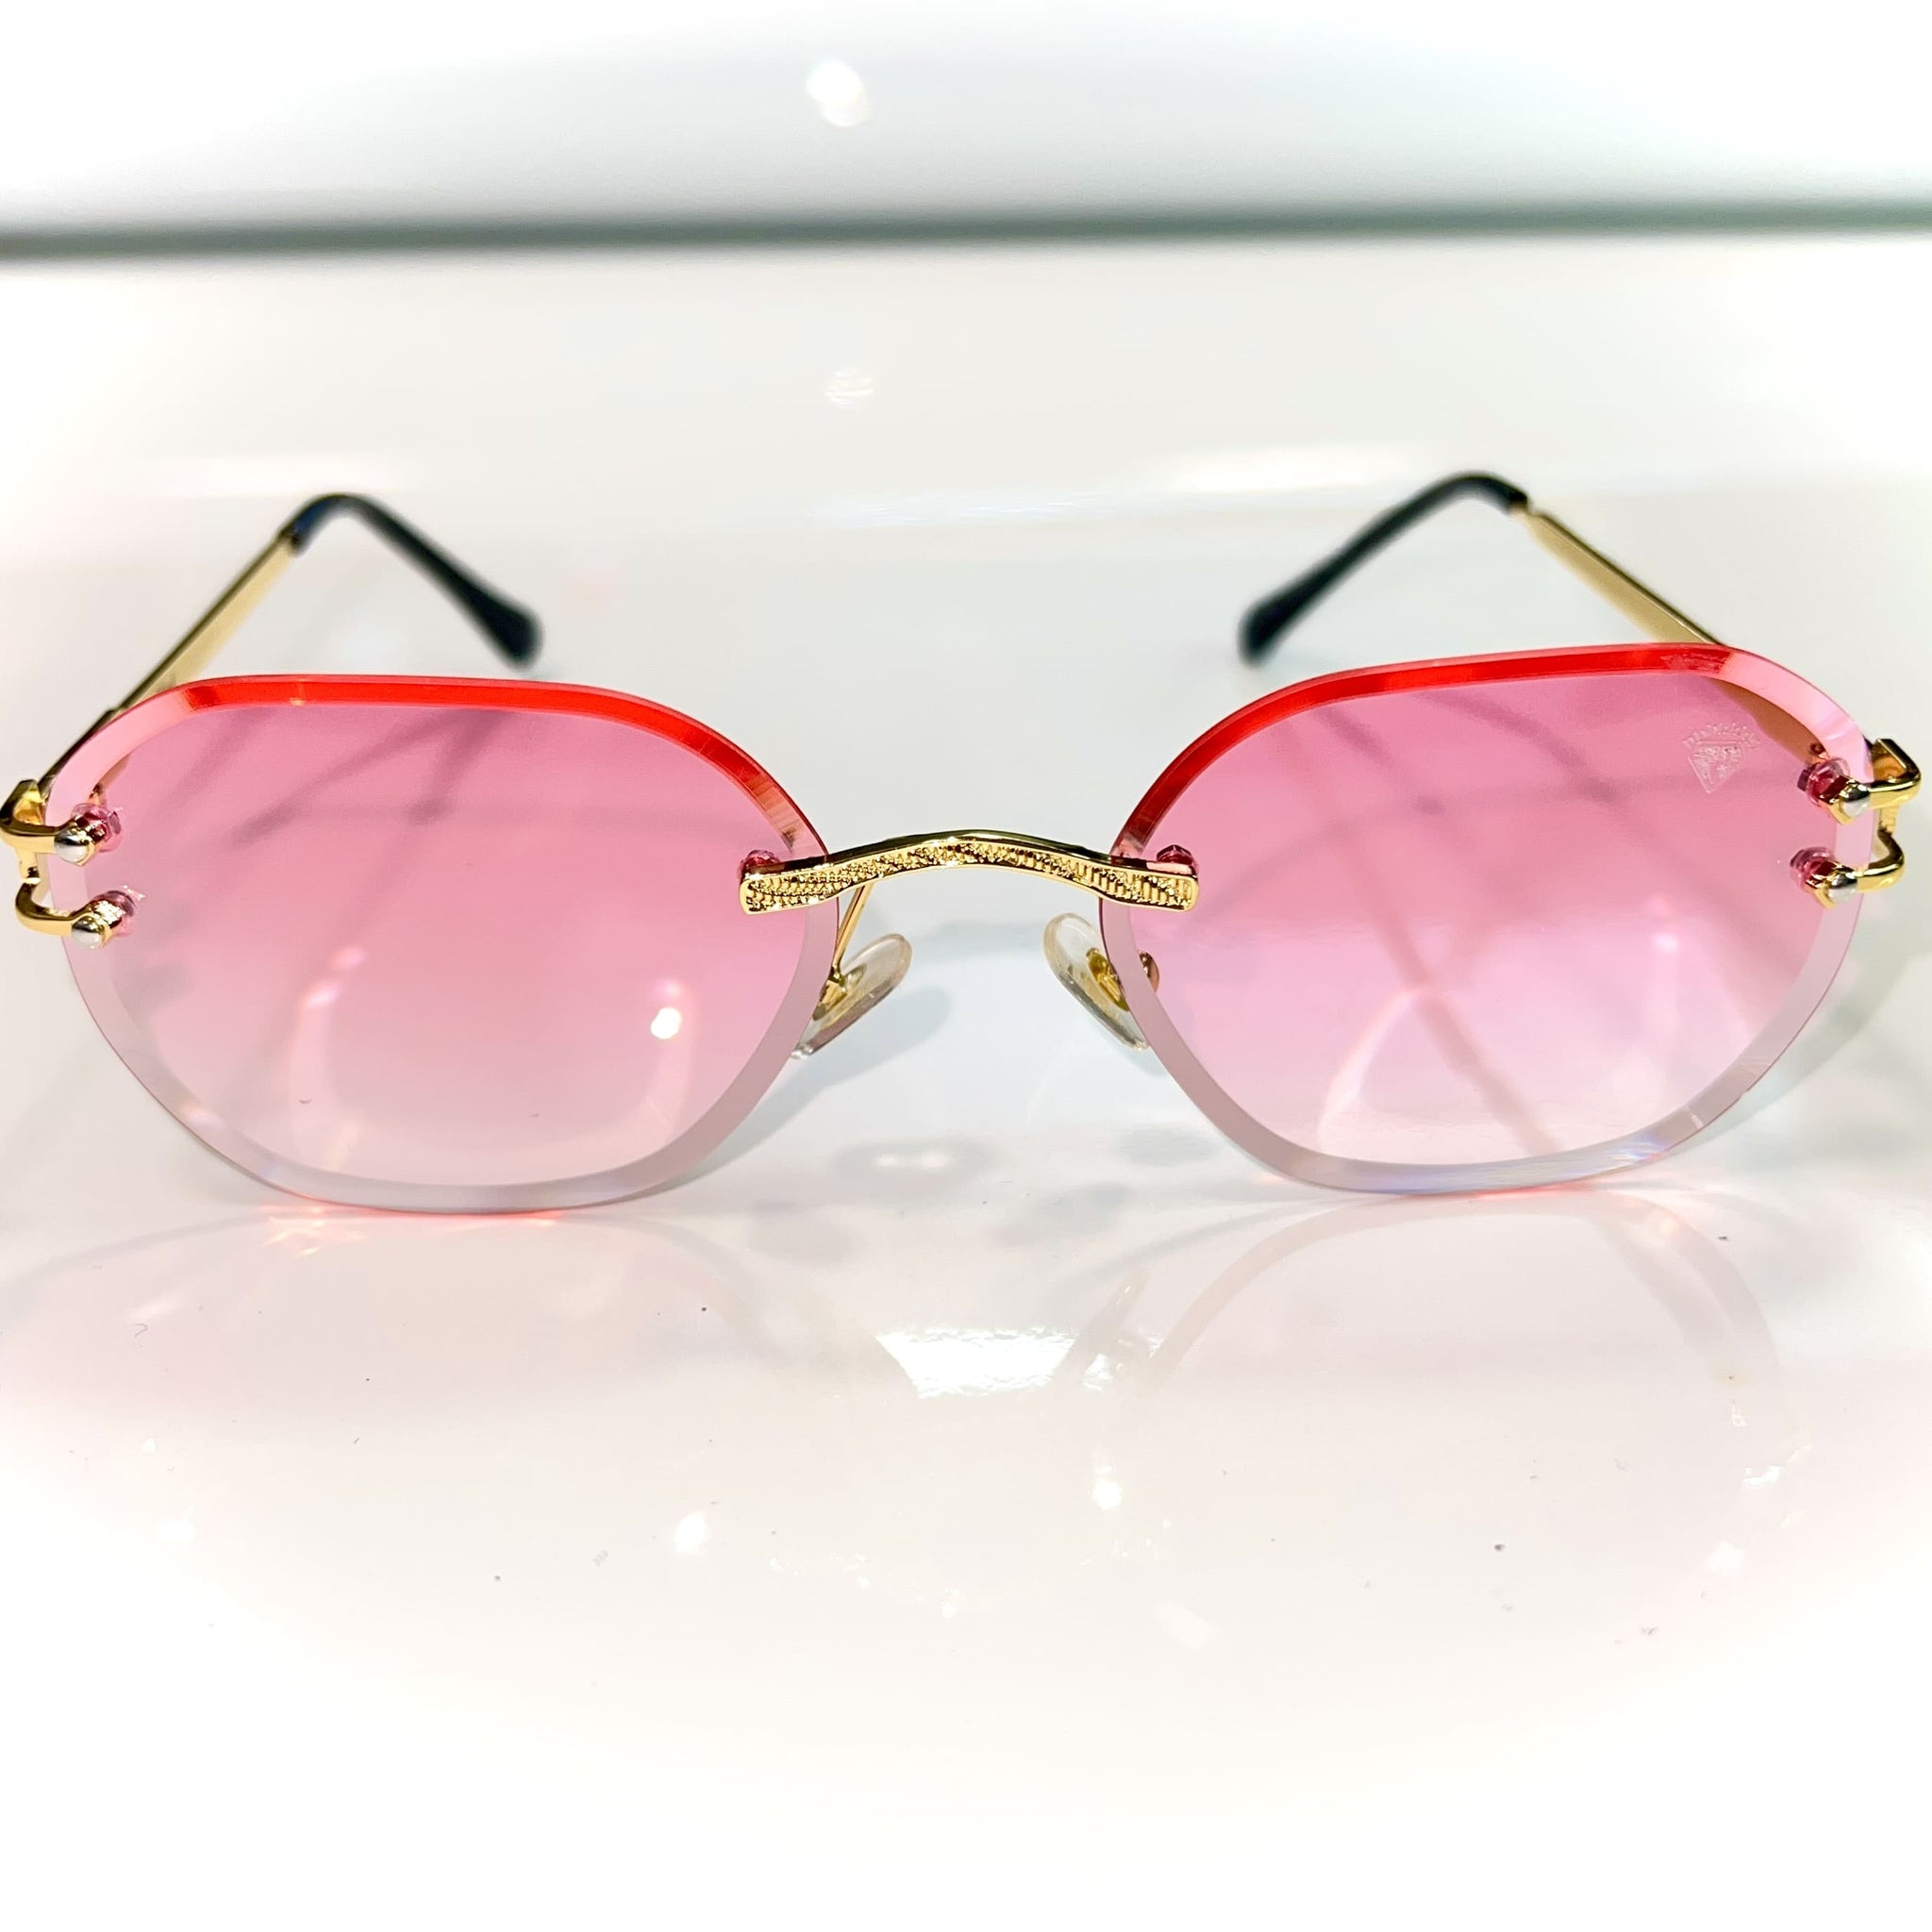 Pharaoh Glasses - Diamond cut / 14 carat gold plated - Pink Shade - Sehgal Glasses